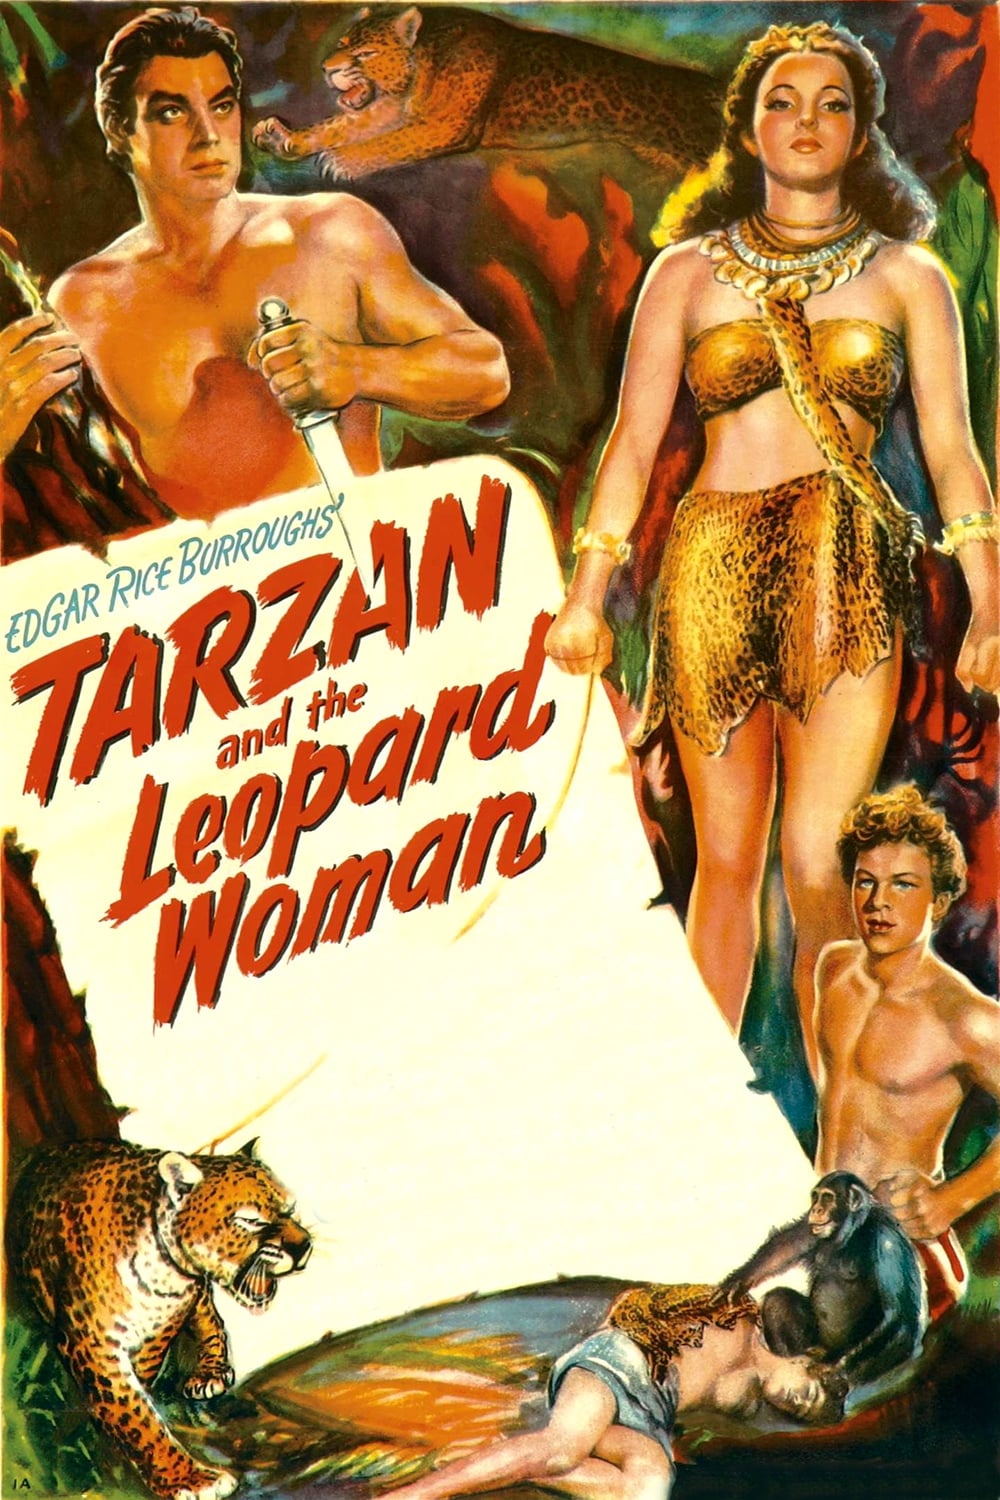 Tarzan et la Femme Léopard